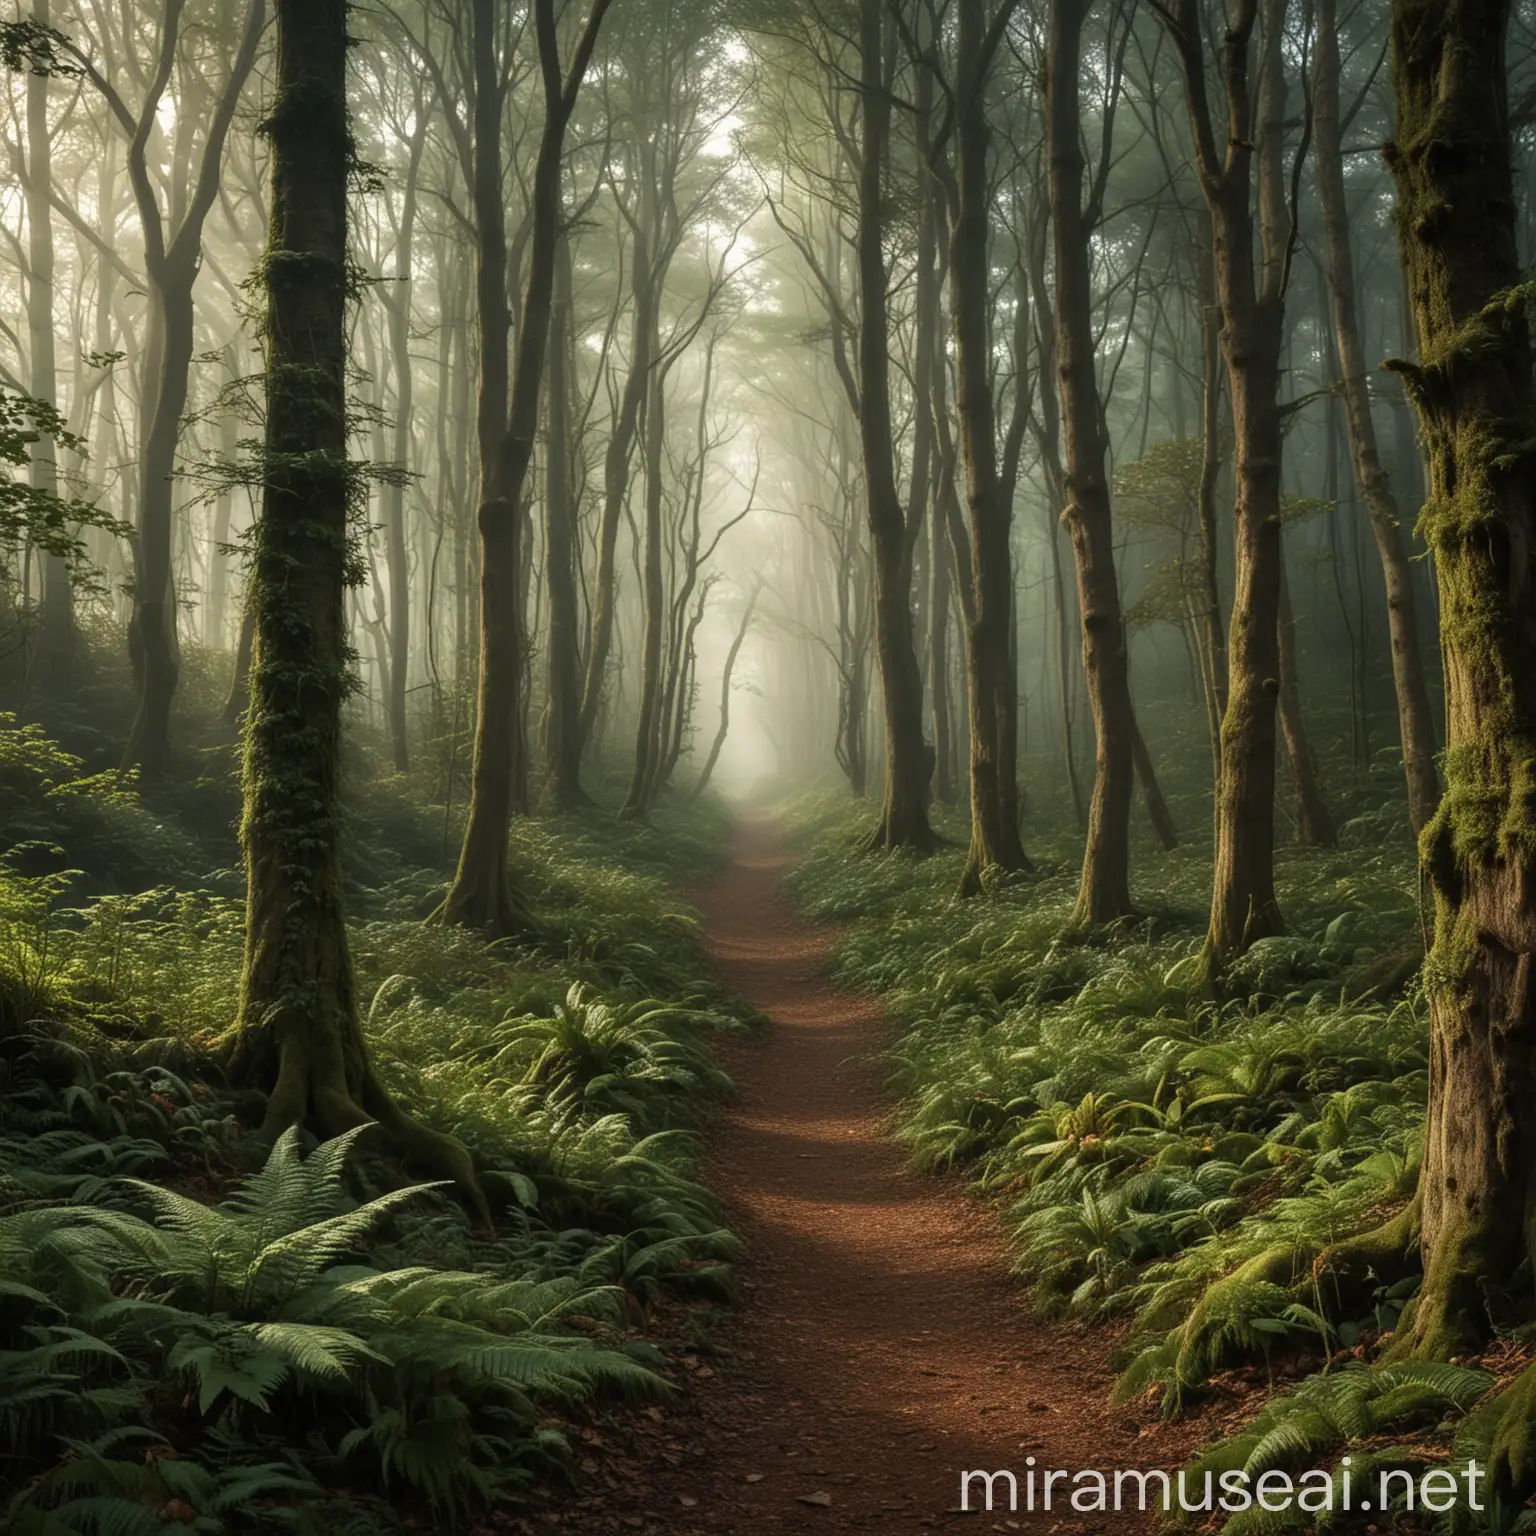 Enchanted Forest Exploration Mystical Journey through Natures Wonderland